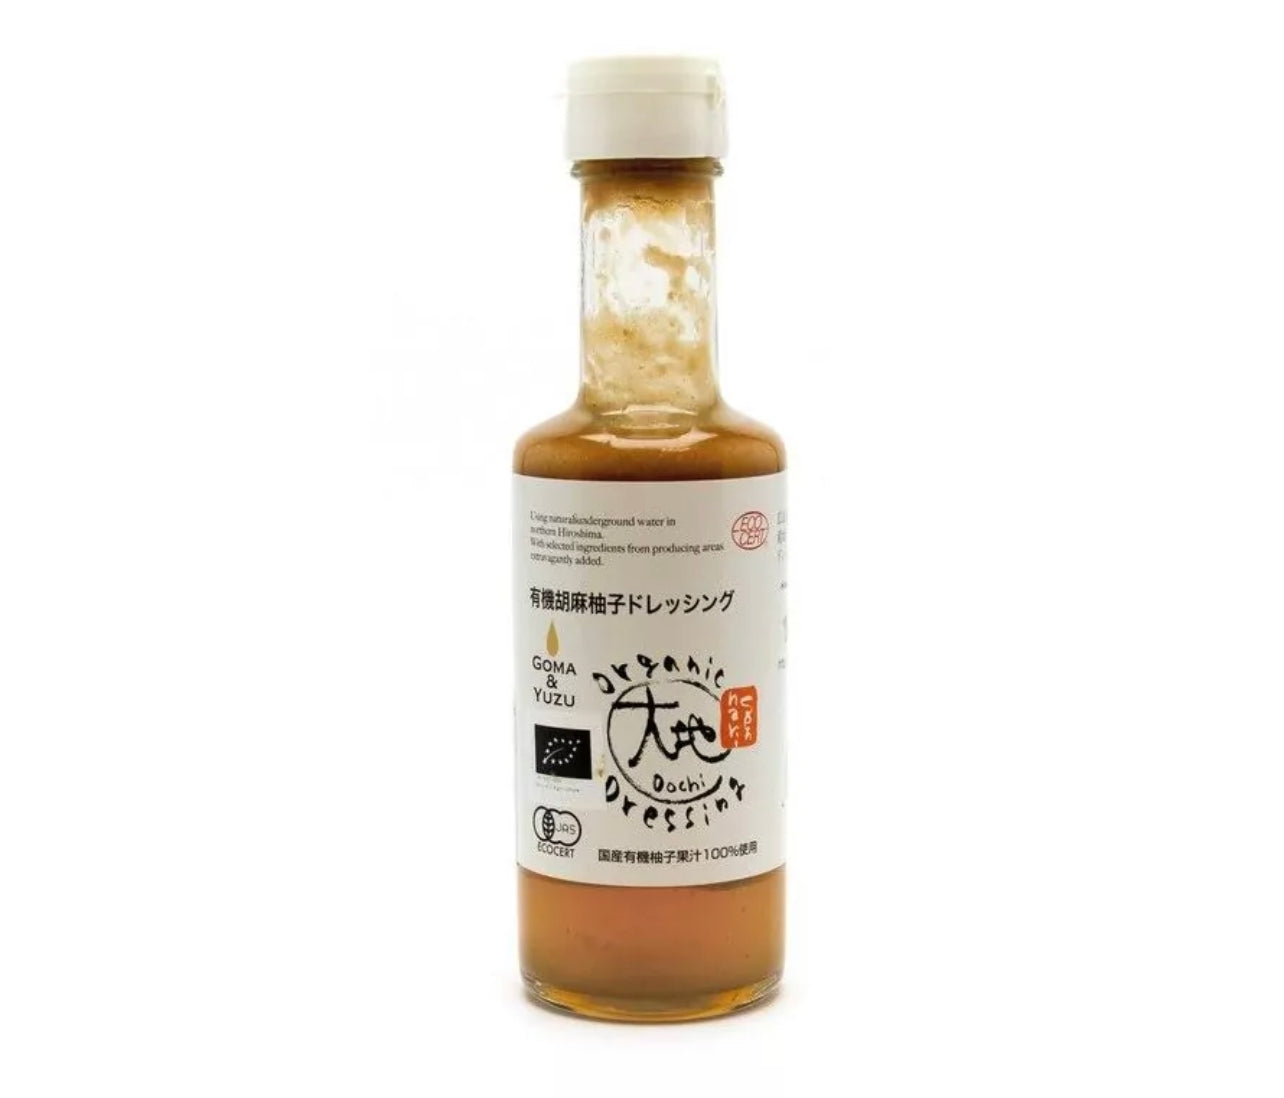 Sesame and yuzu vinegar sauce - 175ml